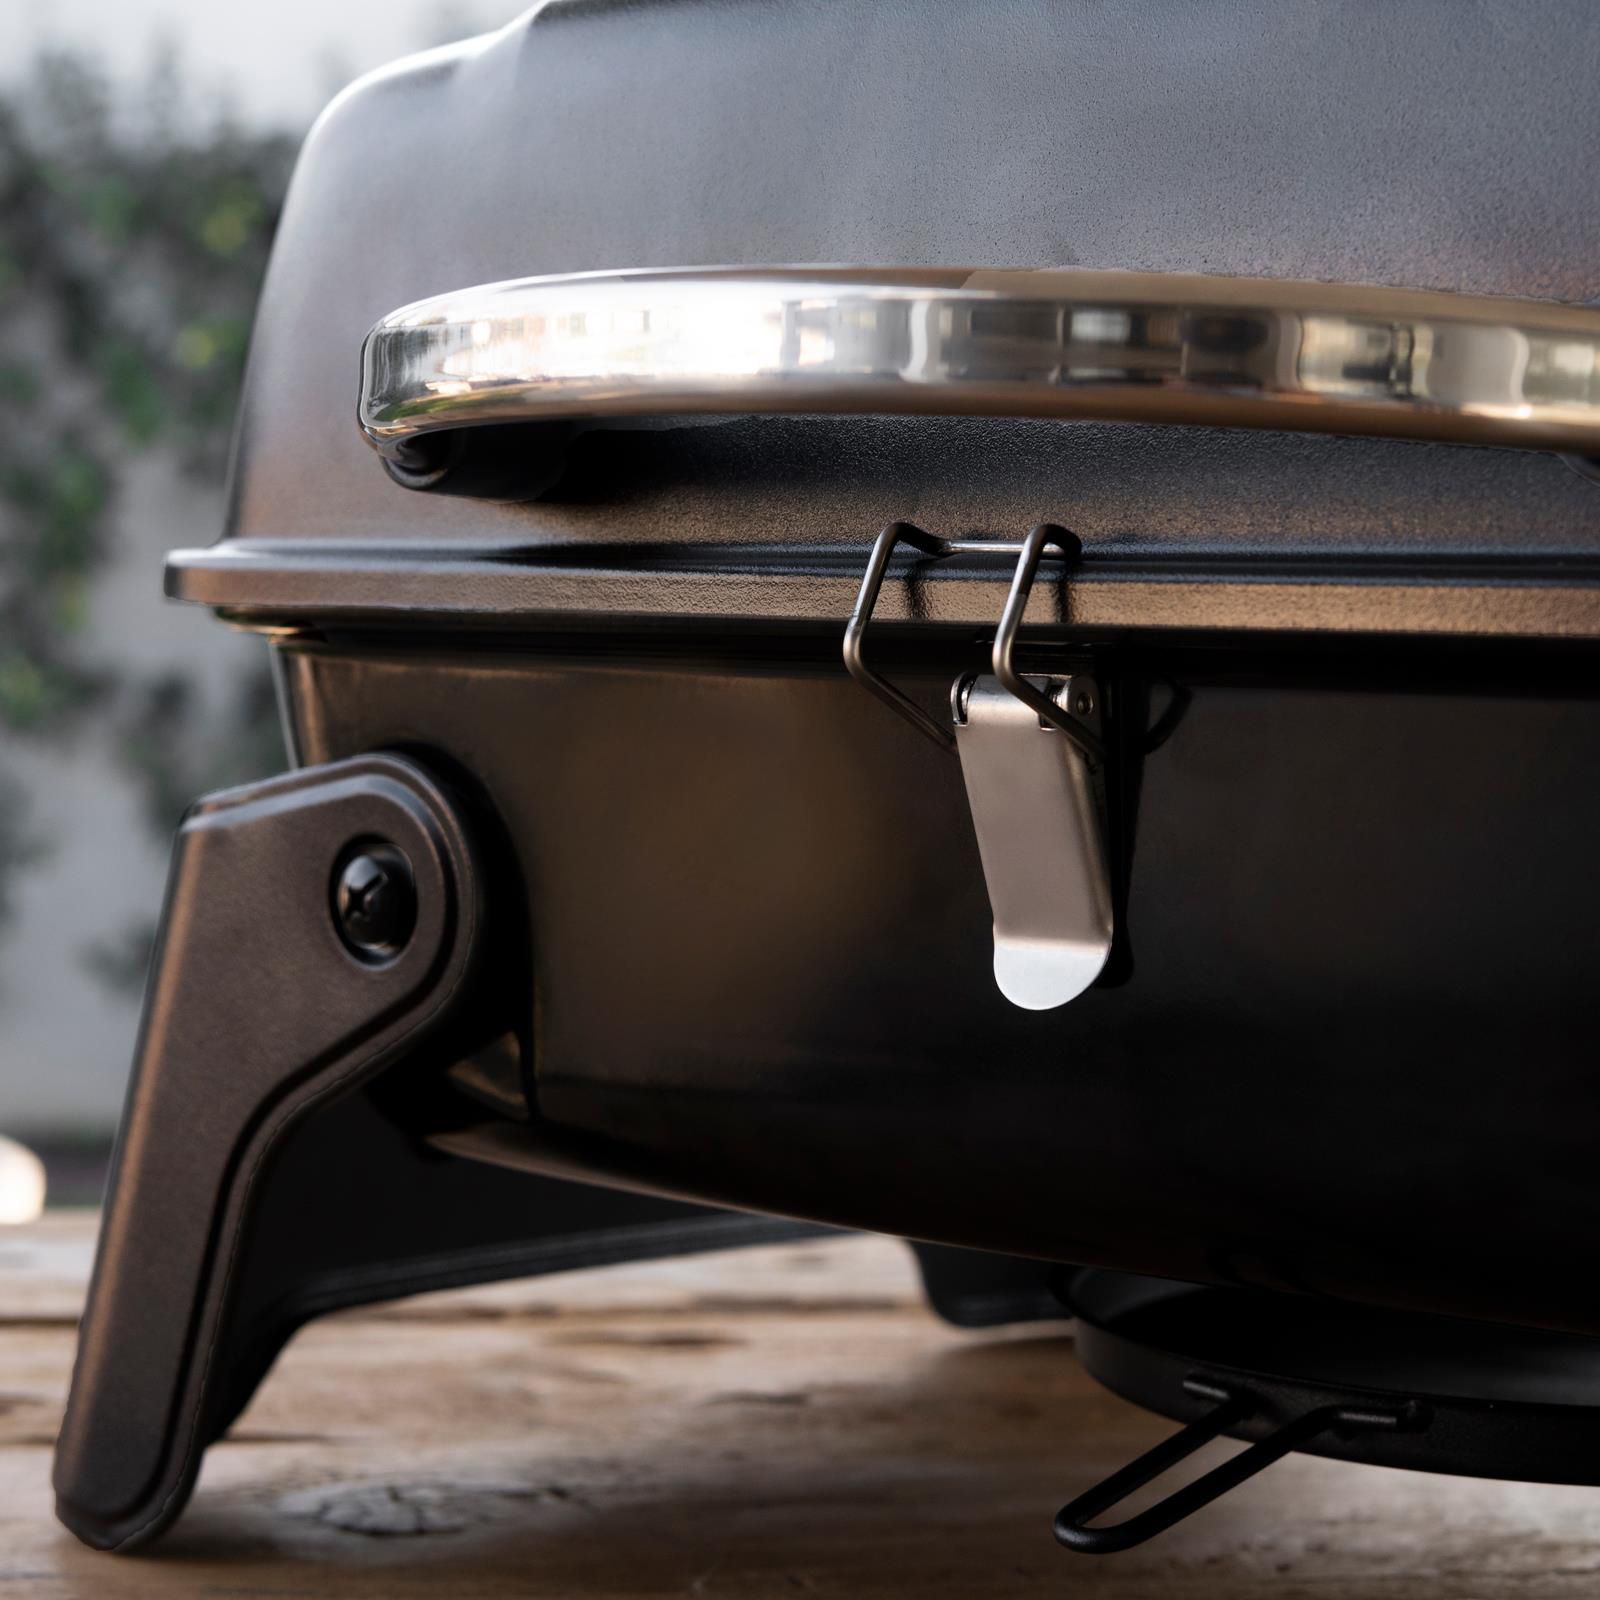 Table Portable Mini Gas Grill BBQ - Gas Barbecue Grill - NewStar